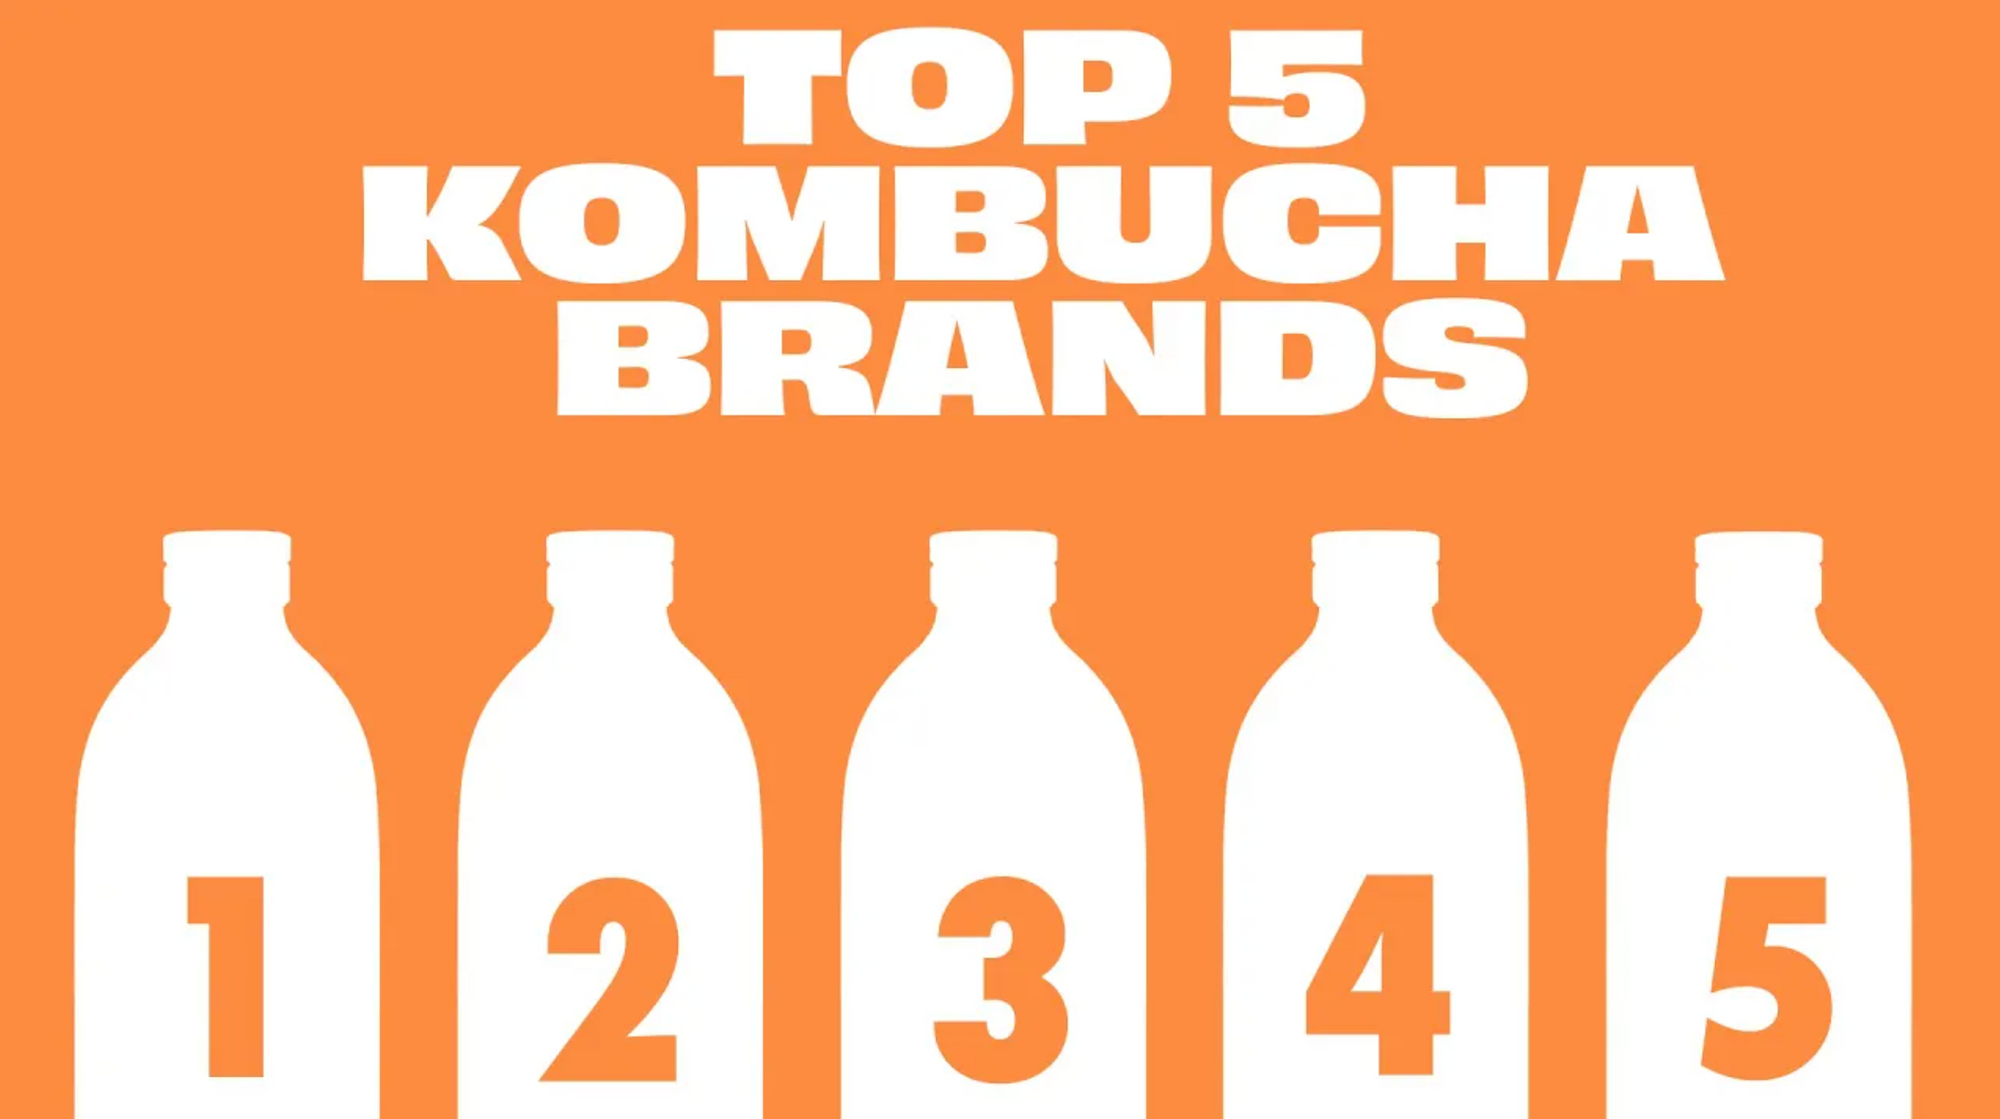 Top 5 UK Kombucha Brands